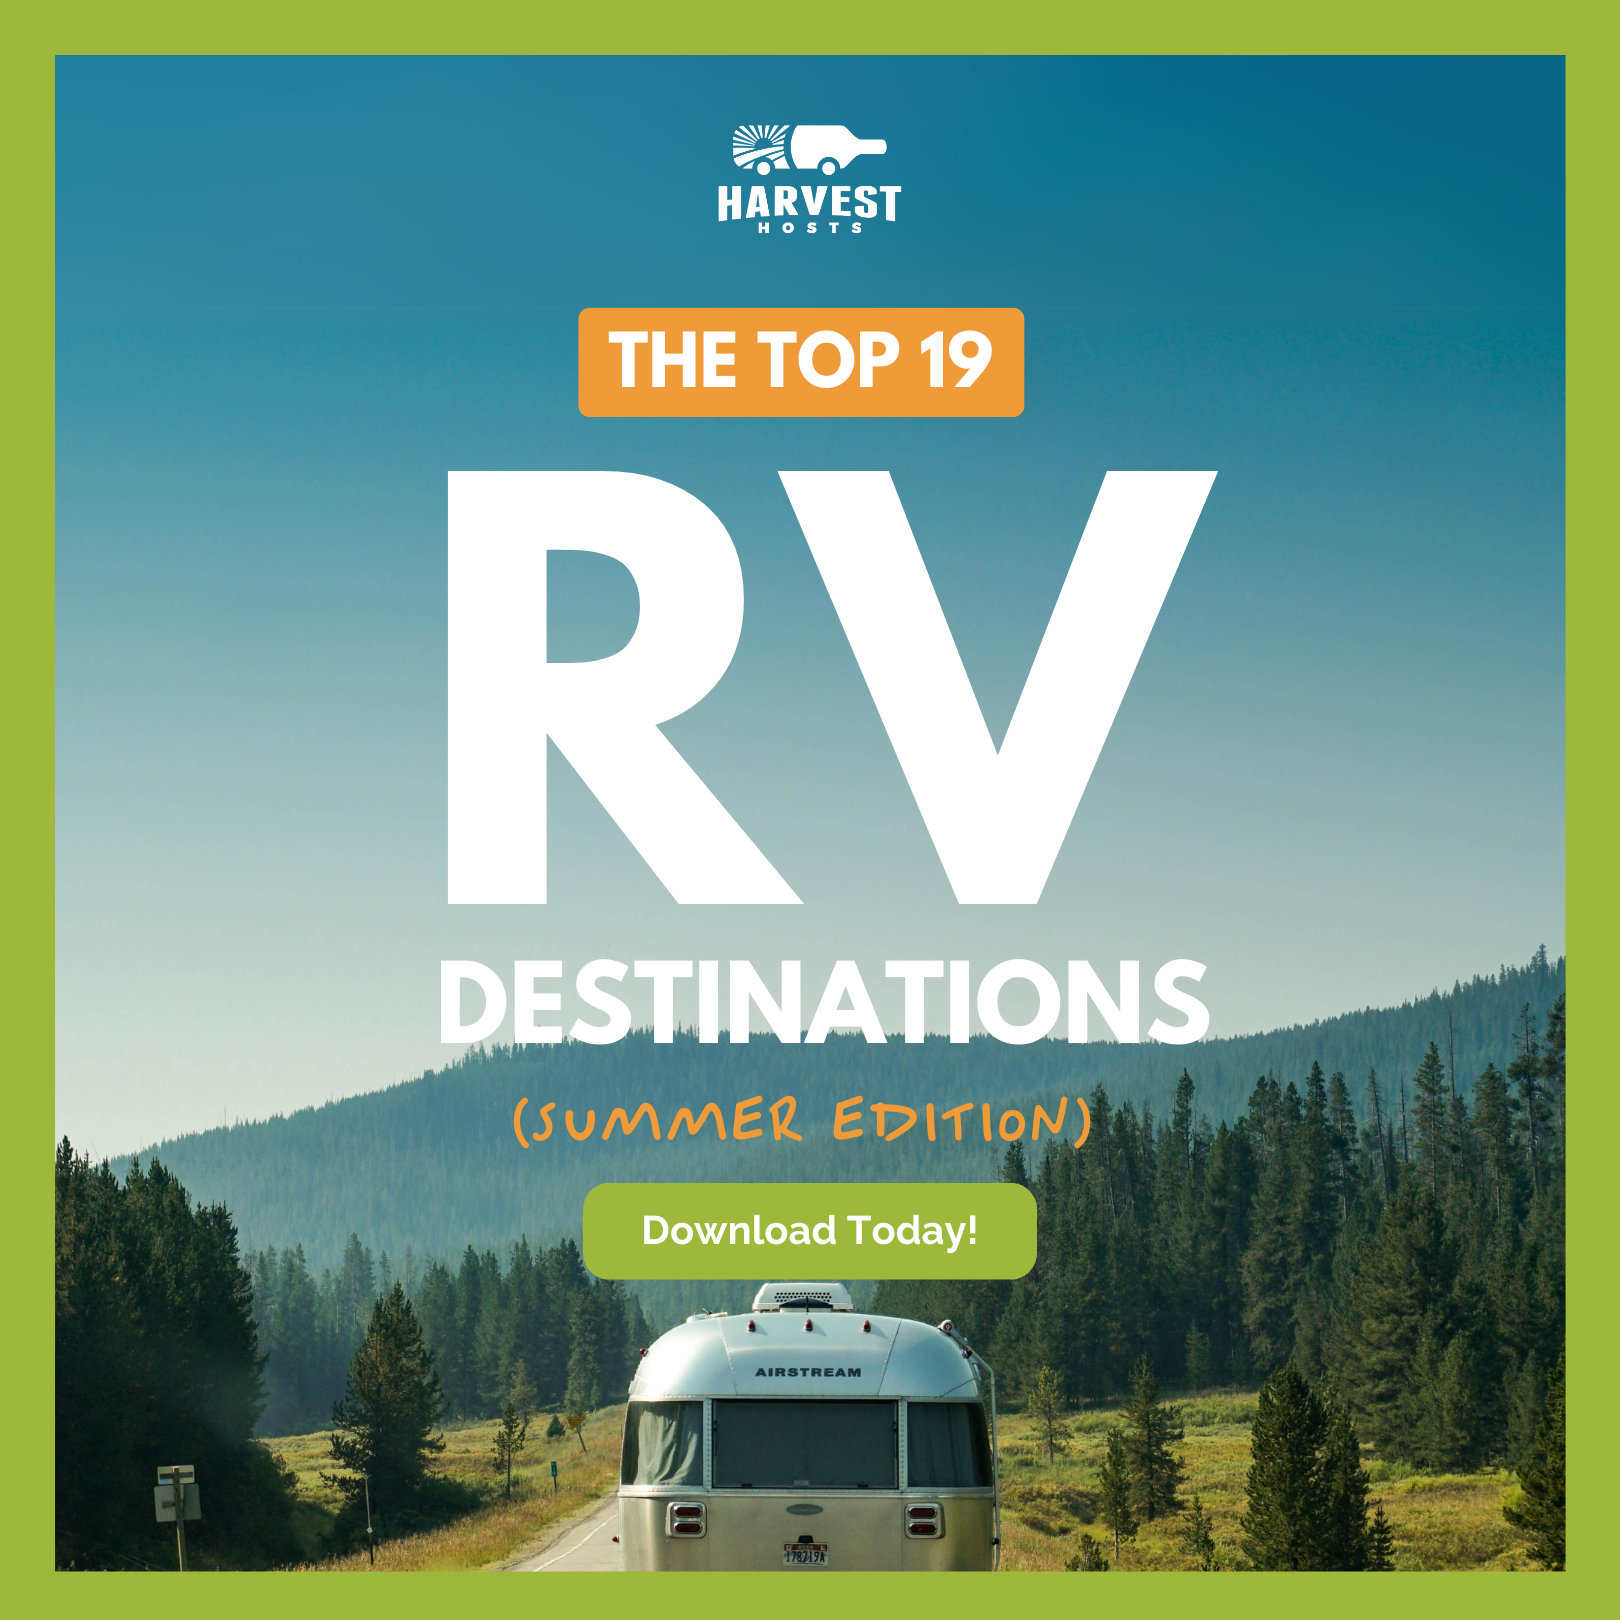 Top 19 Destinations for RVers